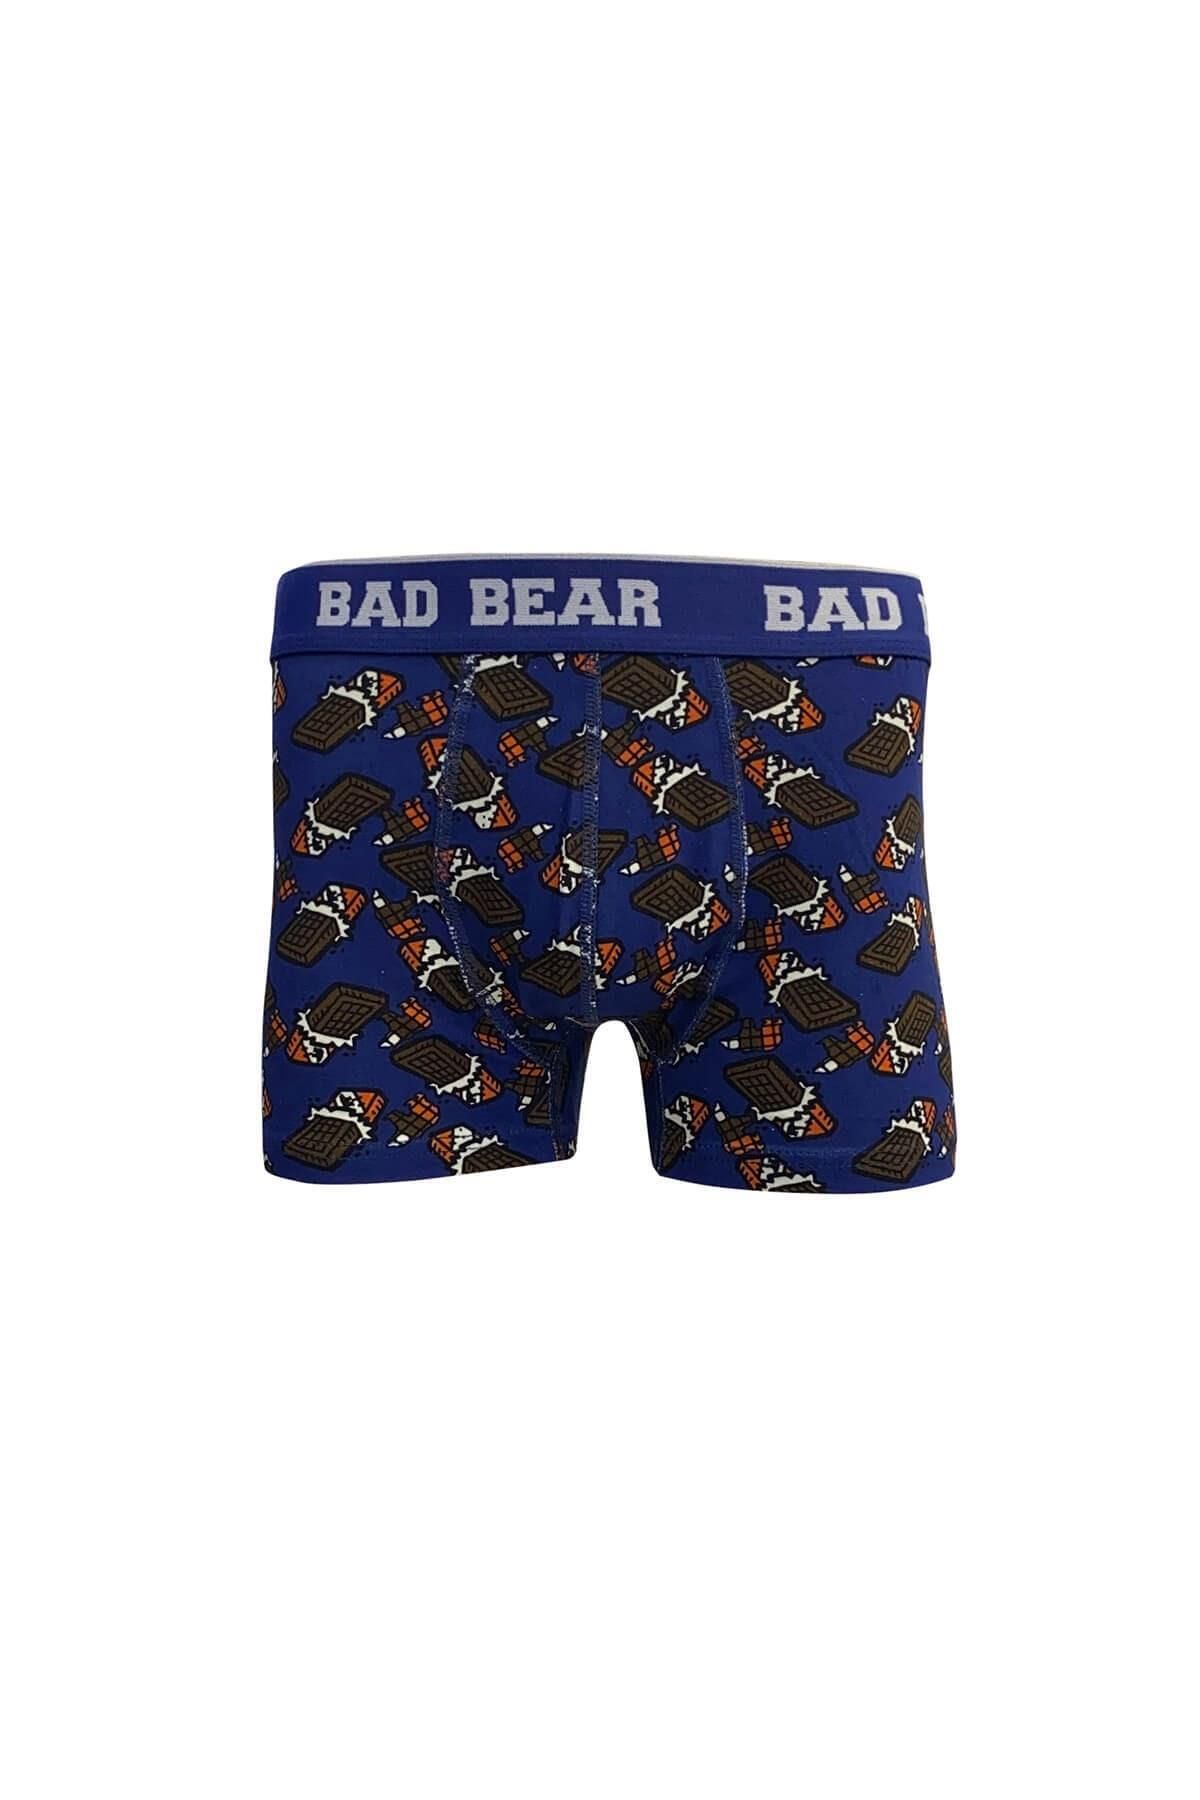 Bad Bear 21.01.03.004-c07 Chocolate Erkek Boxer